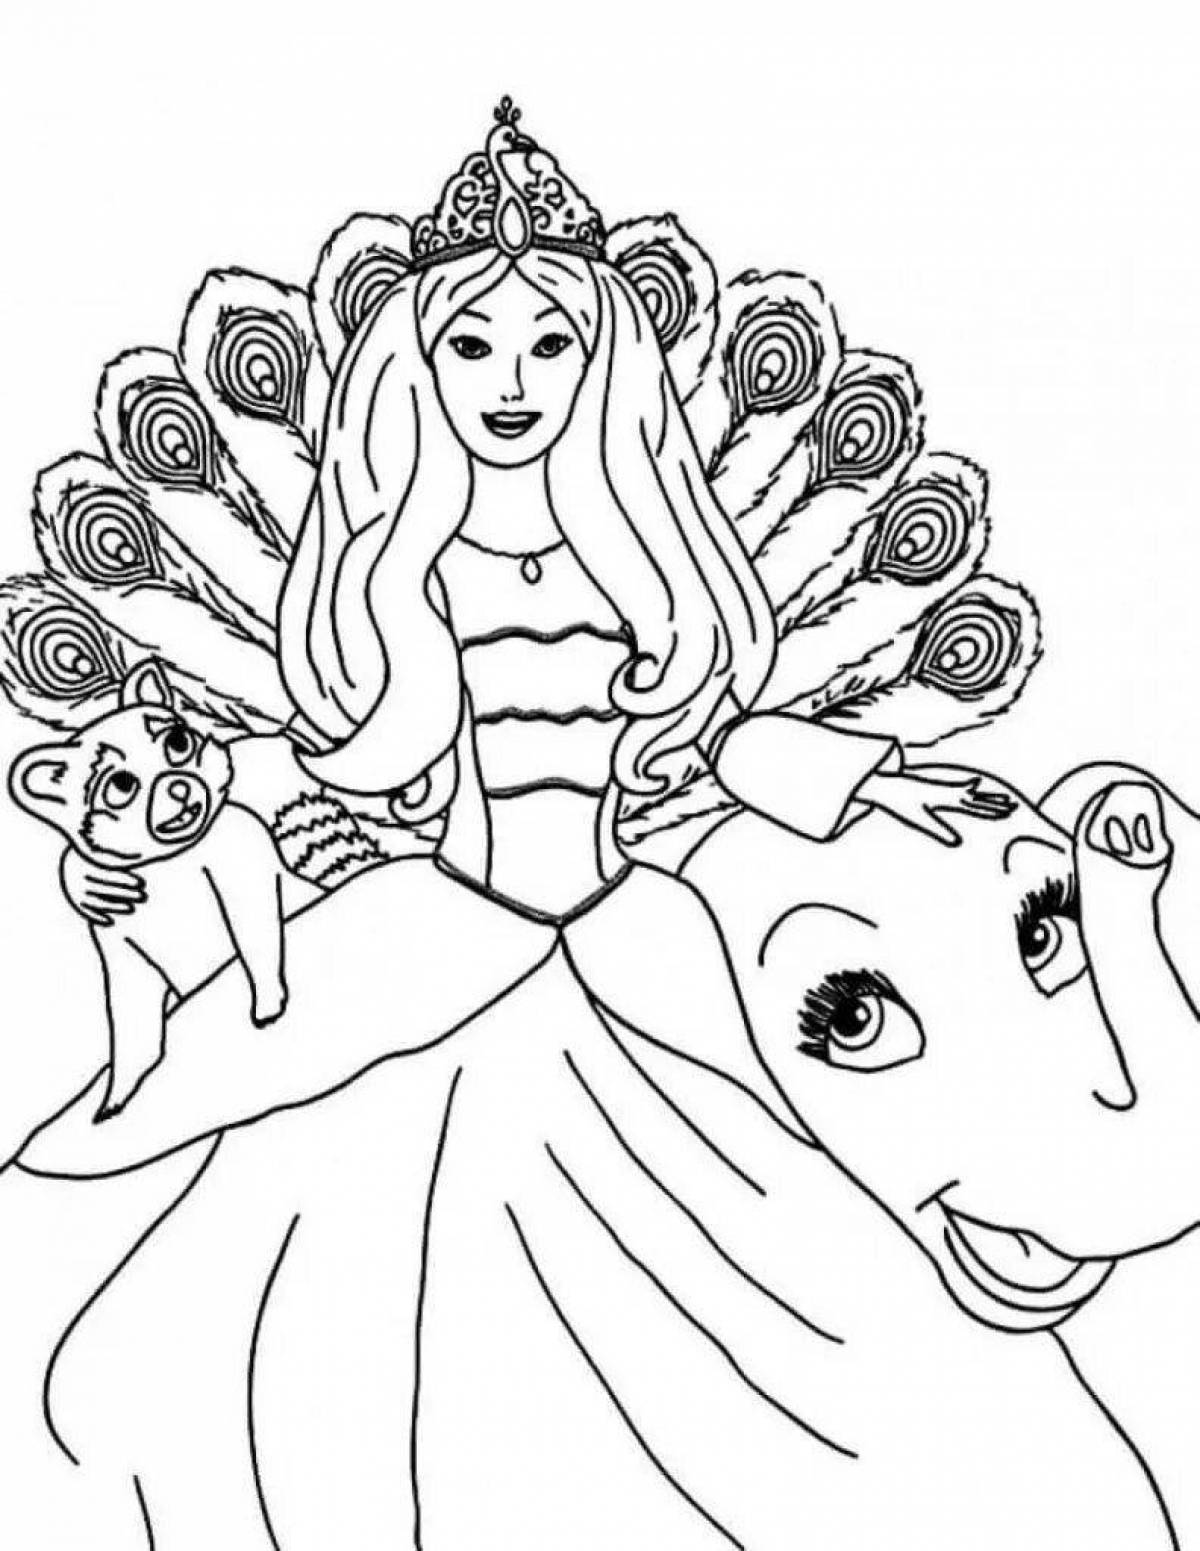 Буйная раскраска принцесса с короной